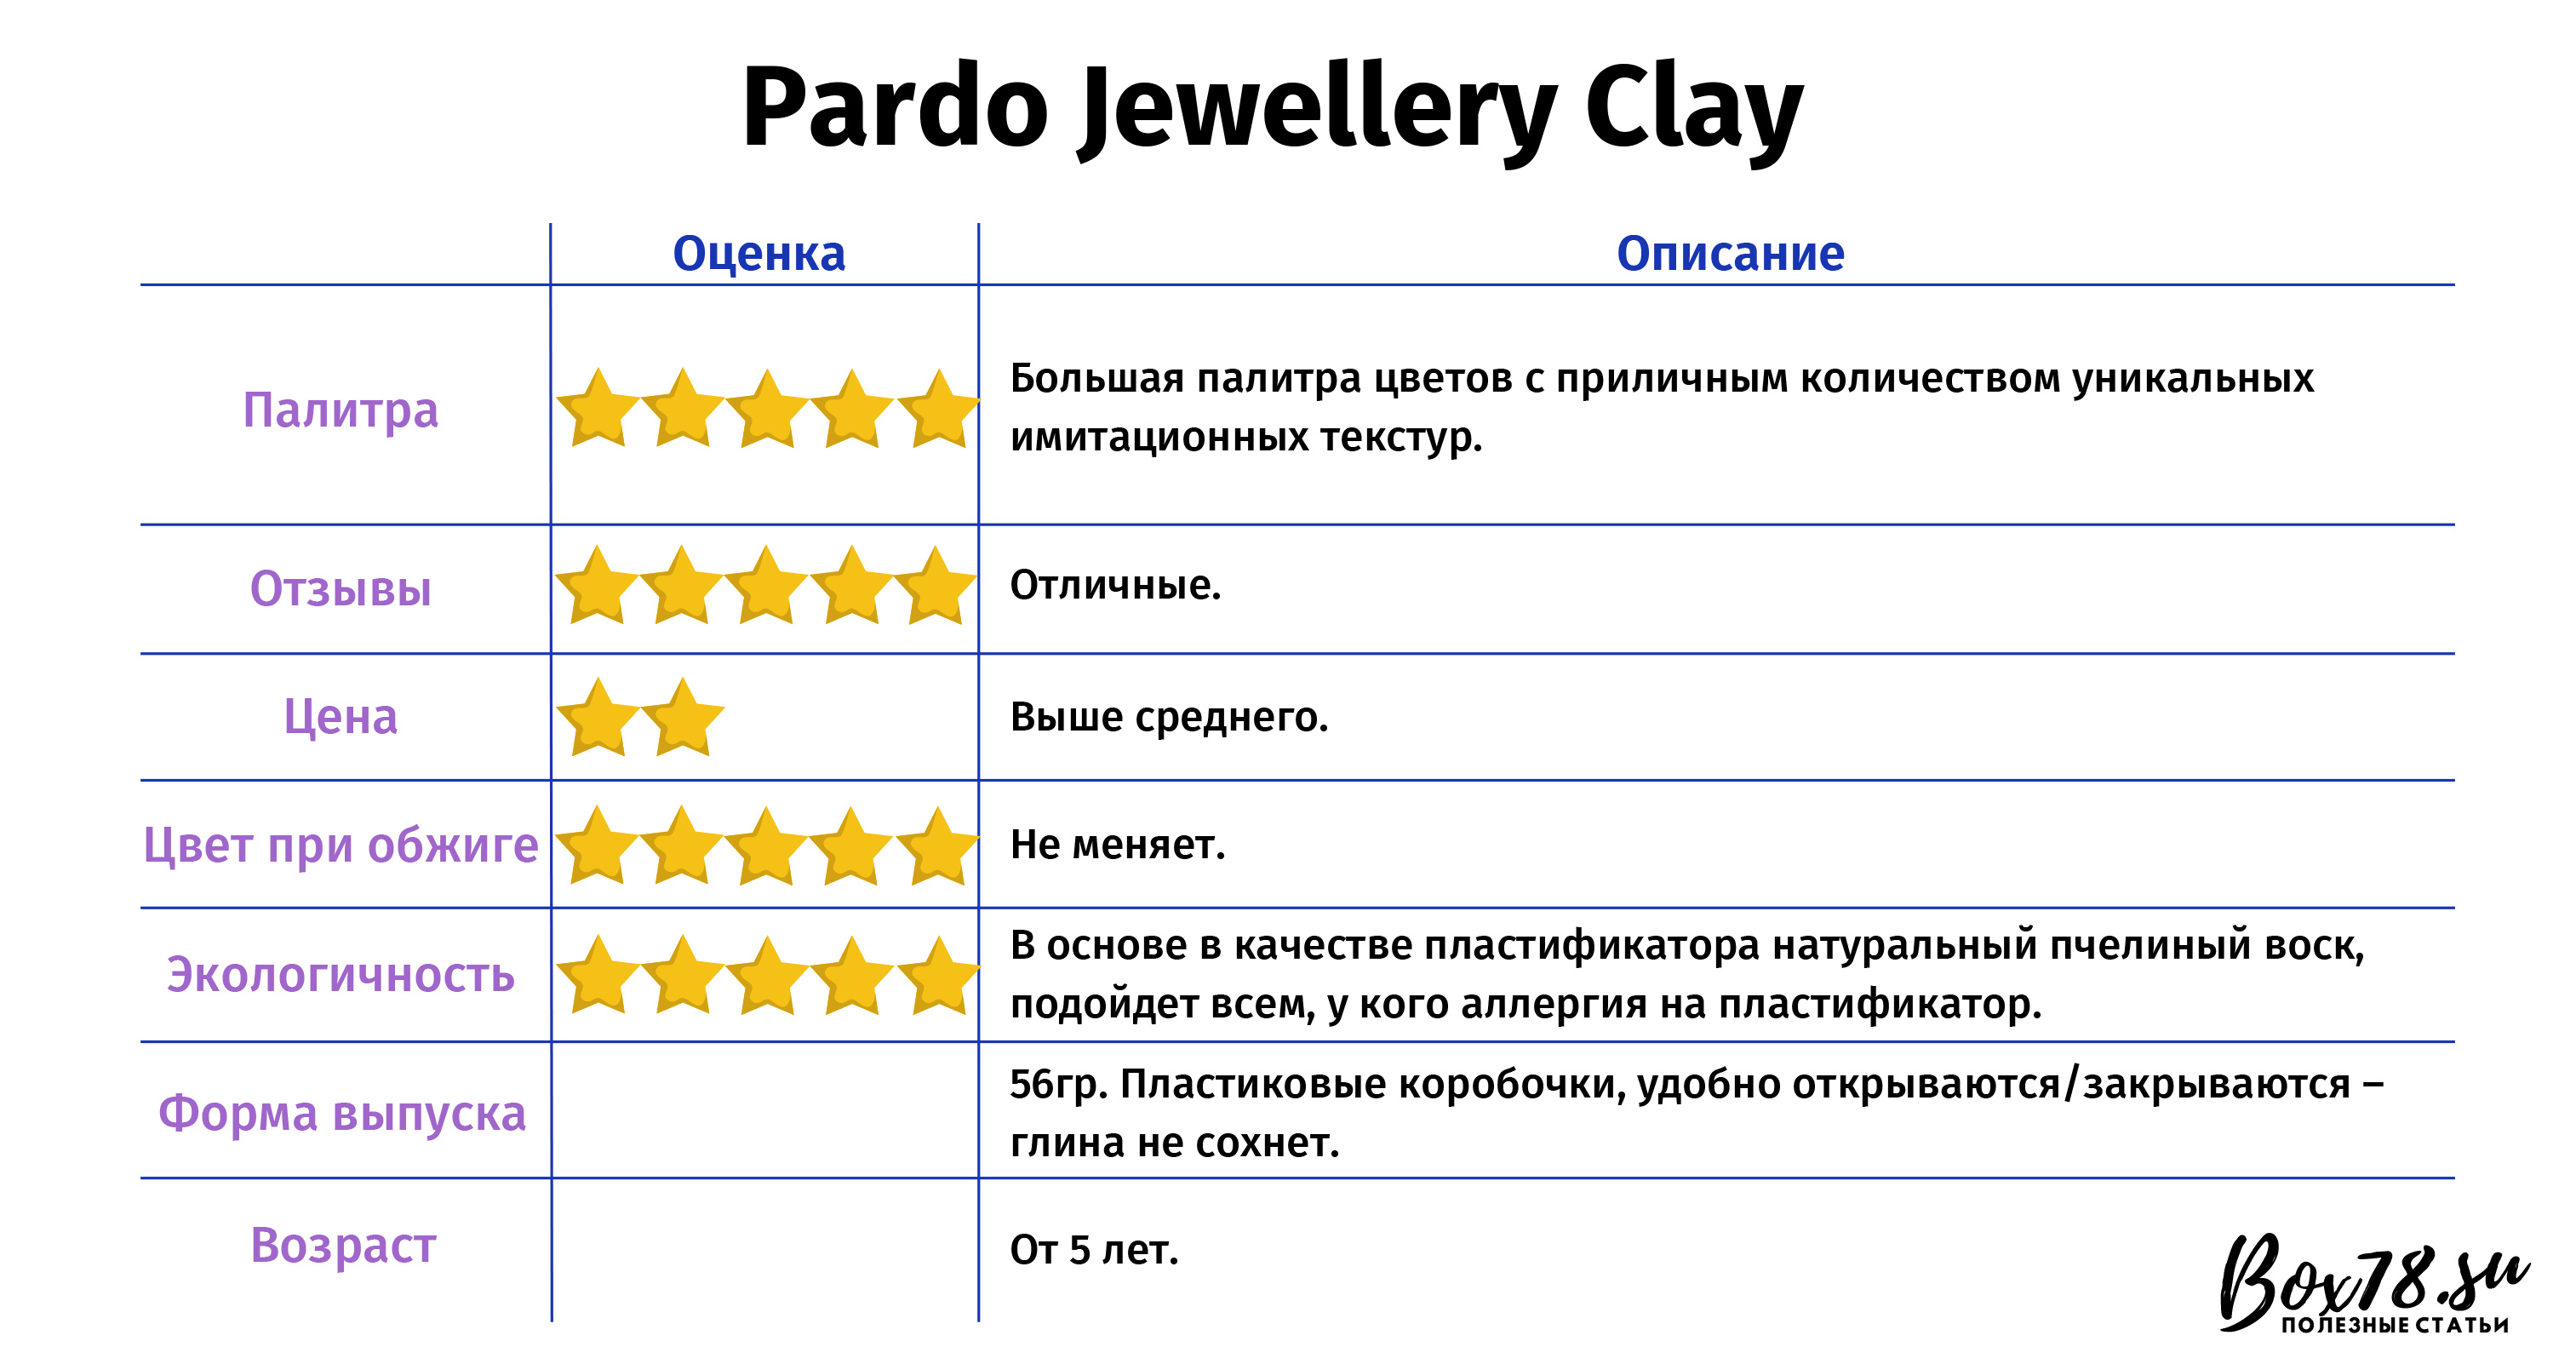 Pardo Jewellery Clay.jpg